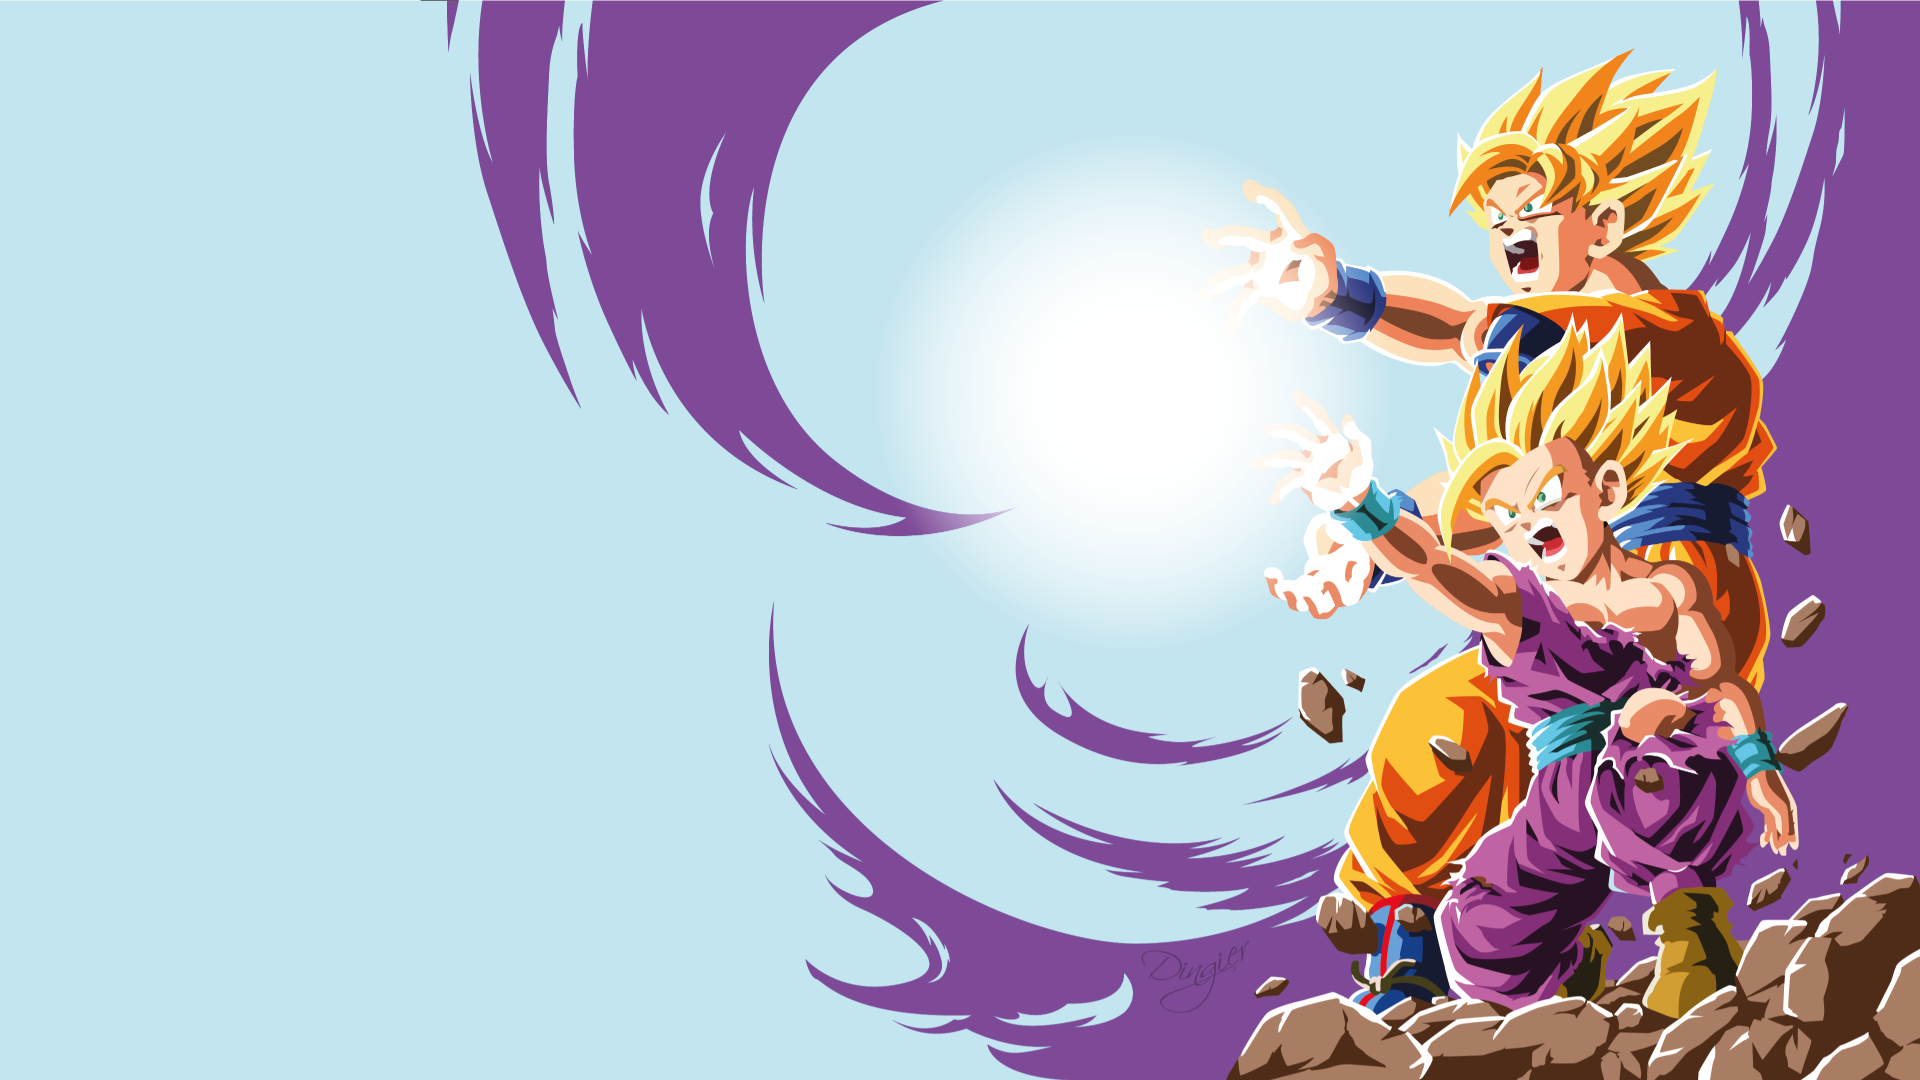 Gohan (Dragon Ball) wallpapers for desktop, download free Gohan